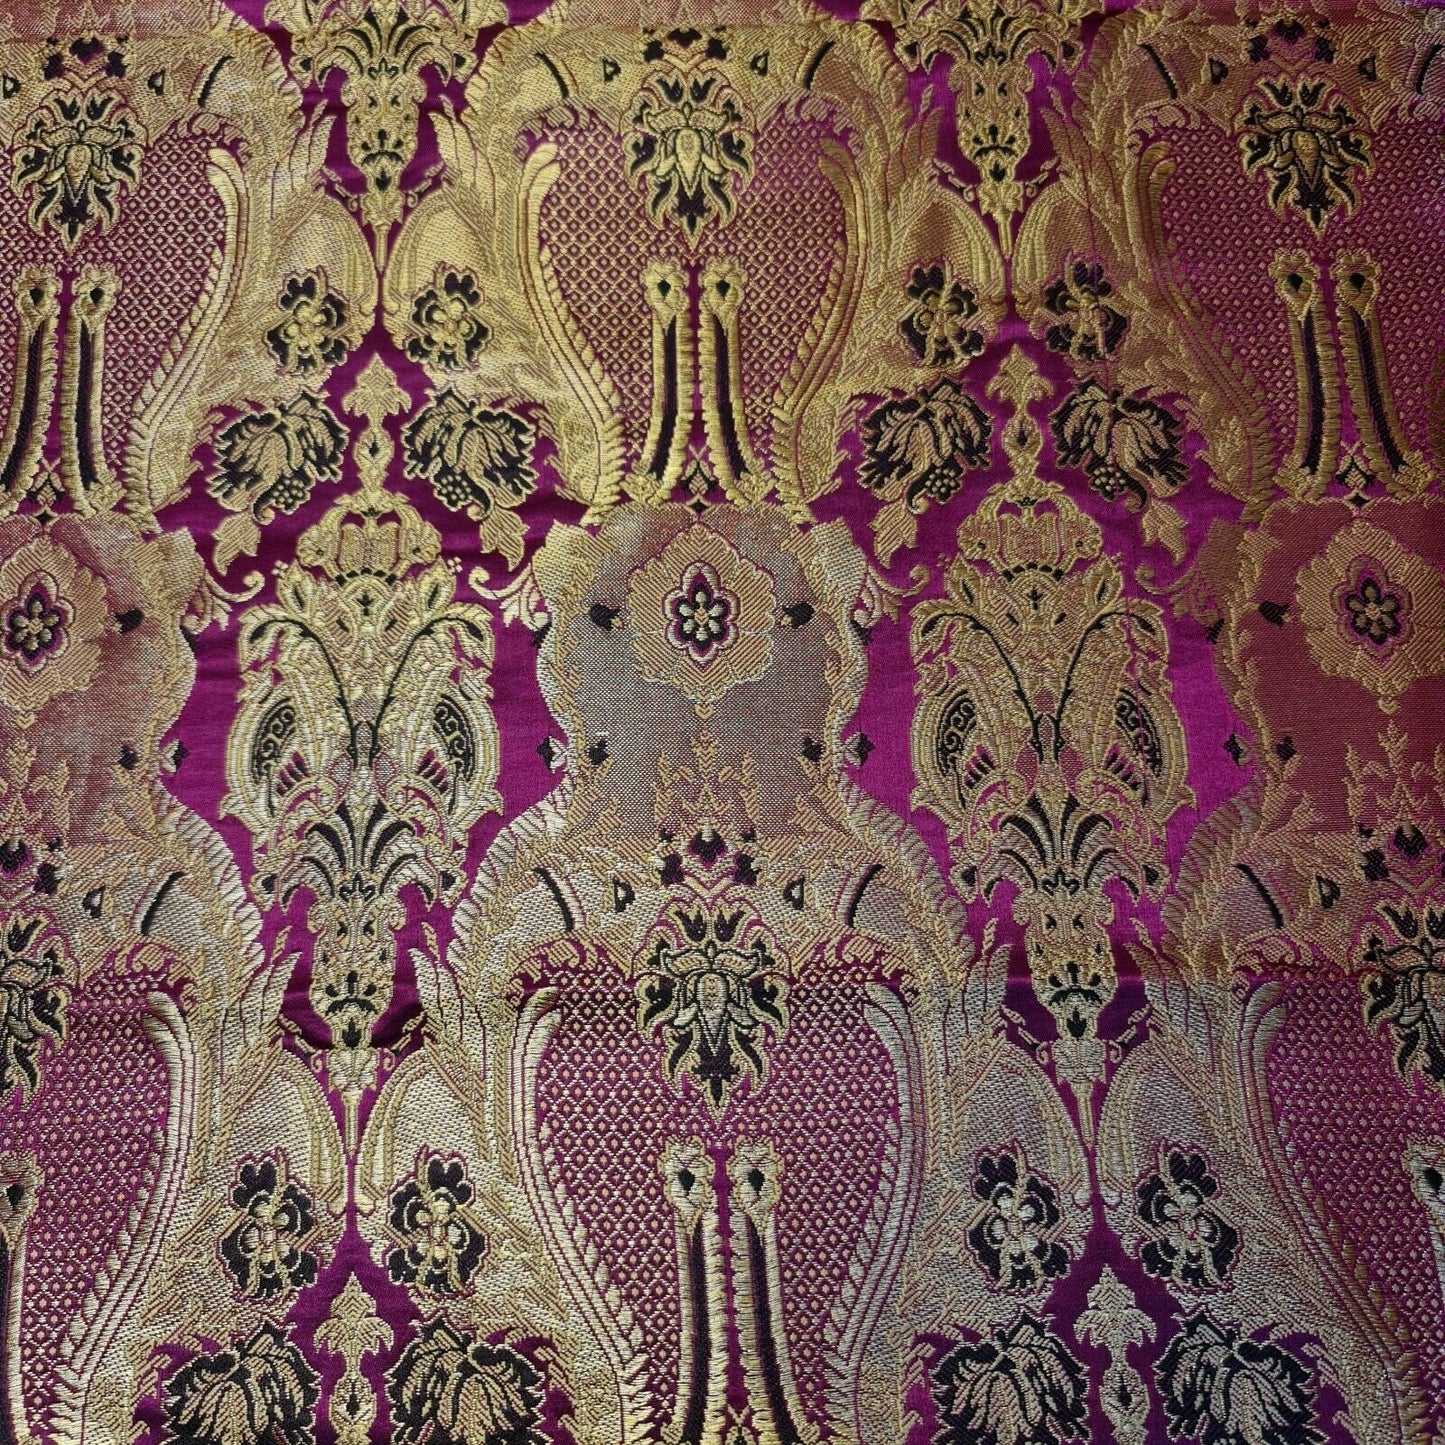 Ornamental Damask Premium Gold Metallic Indian Banarasi Brocade Fabric 44" Meter (CERISE PINK)